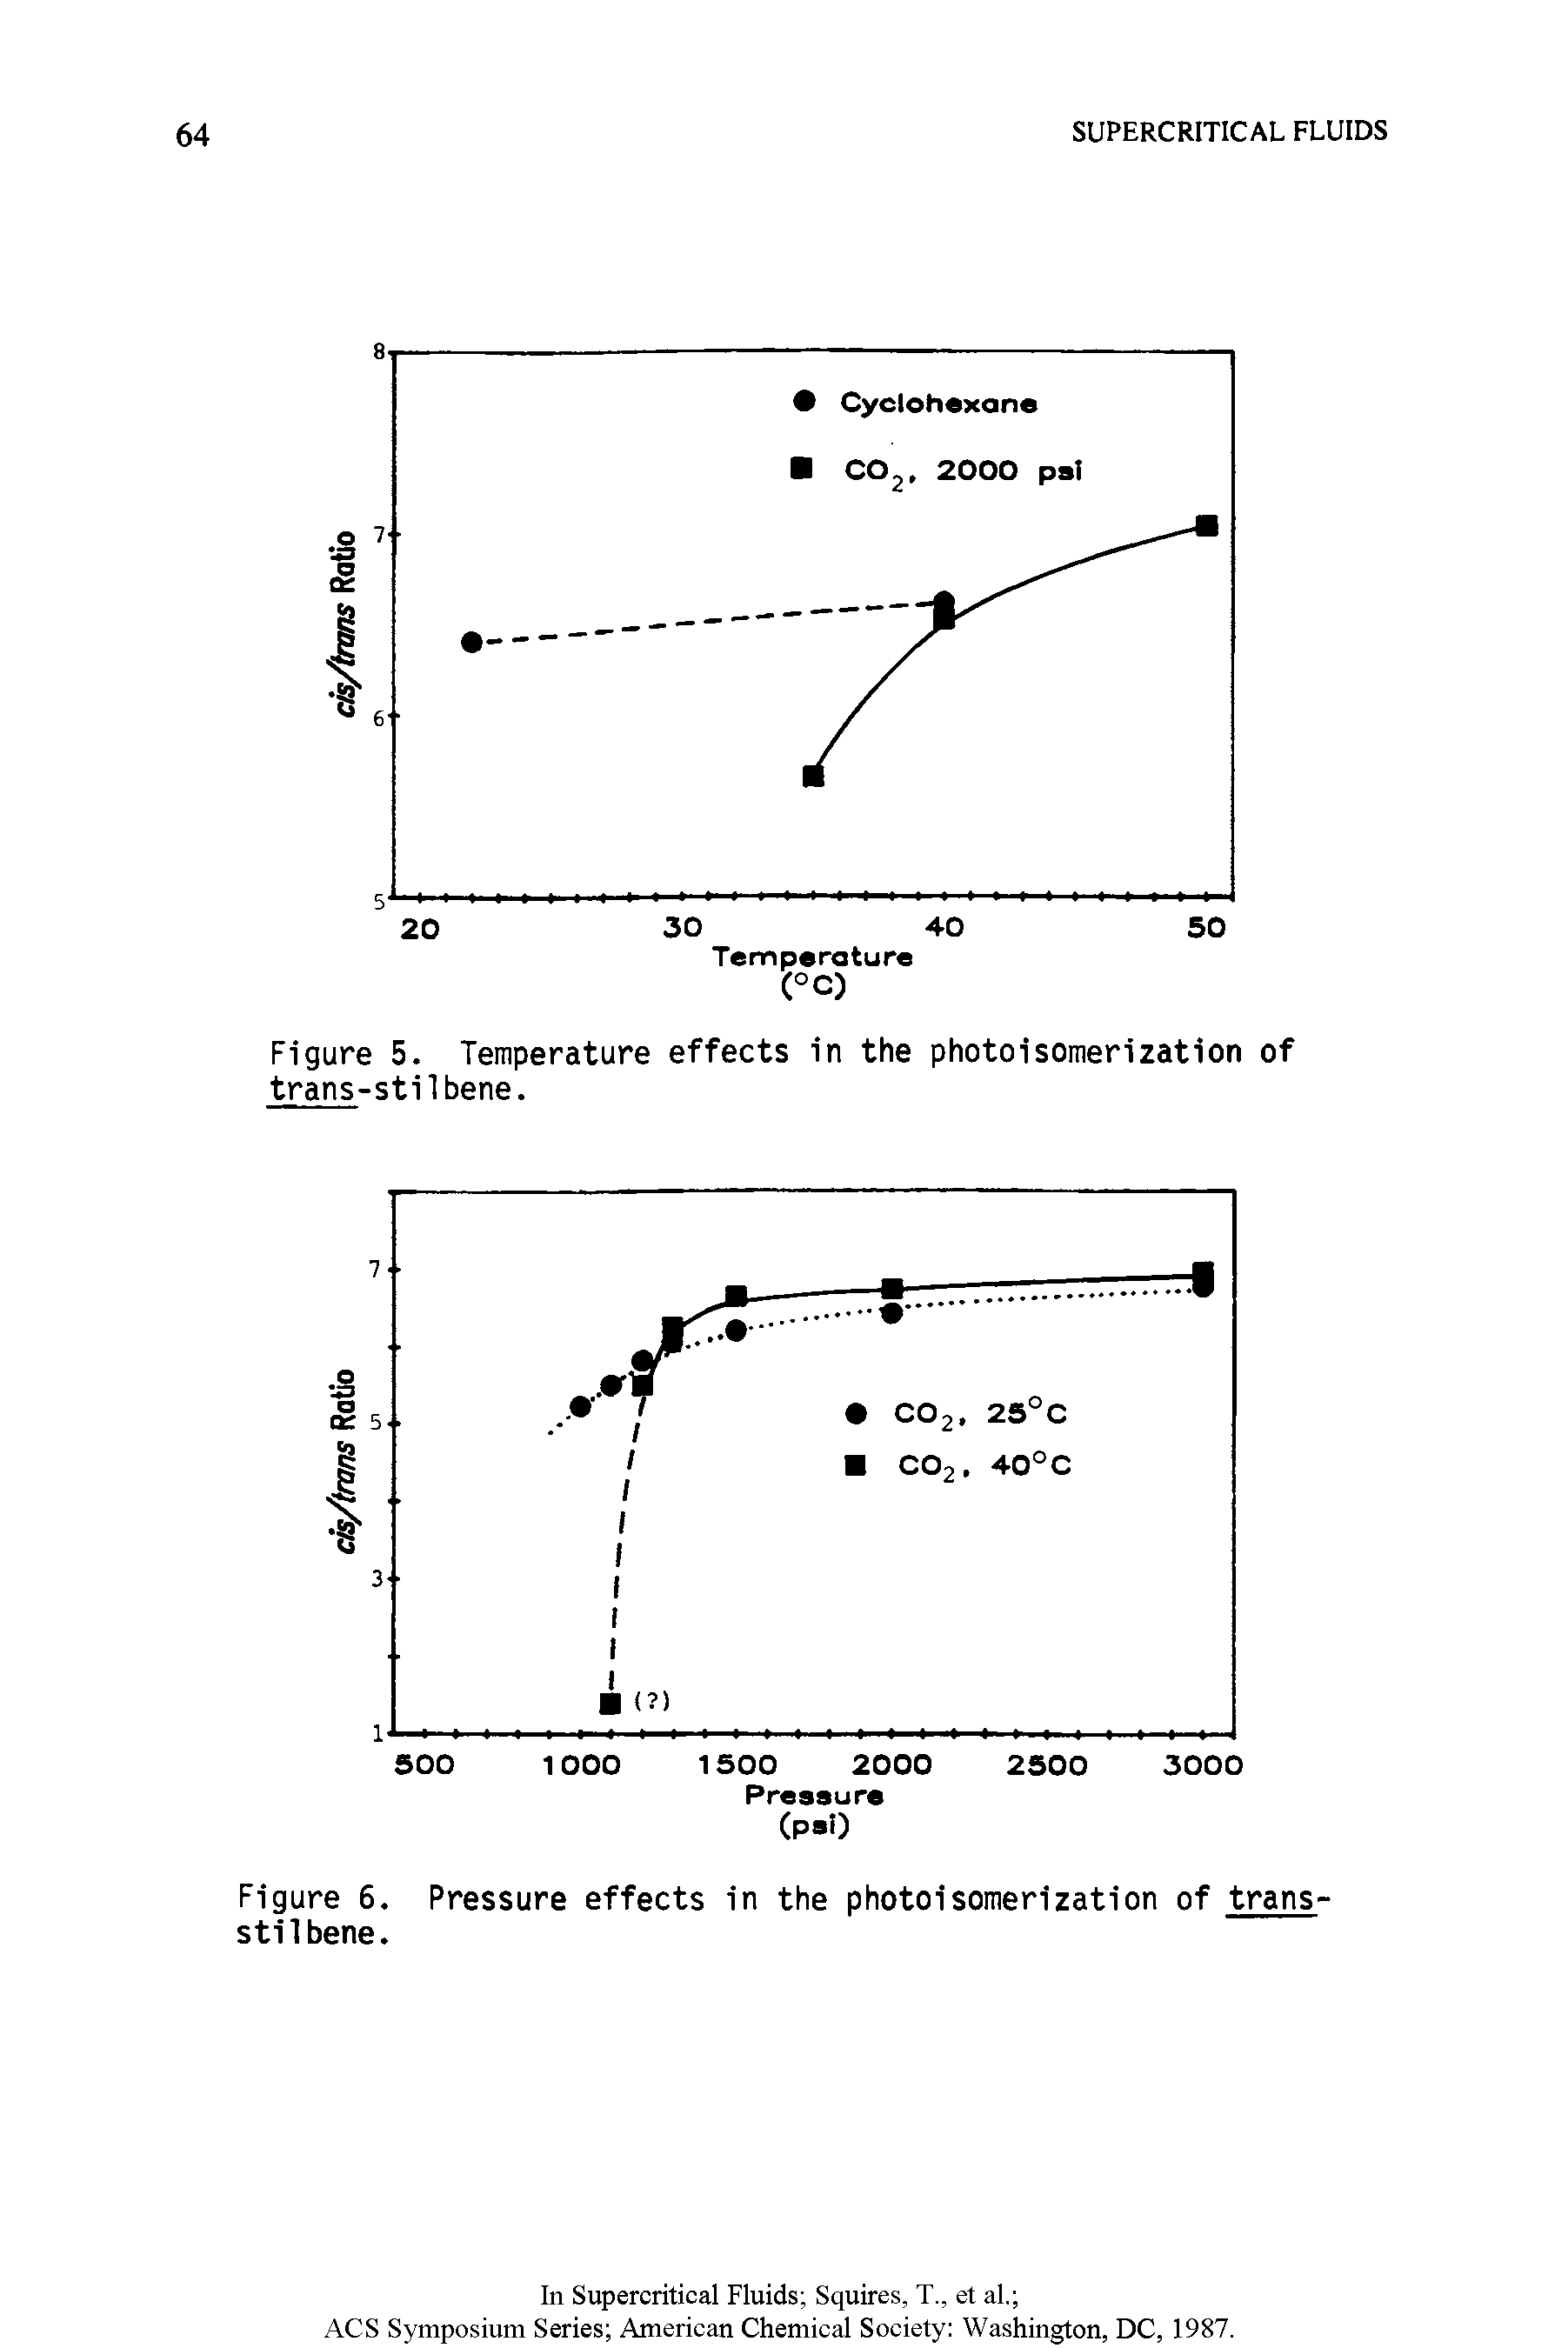 Figure 6. Pressure effects in the photoisomerization of trans-stilbene.